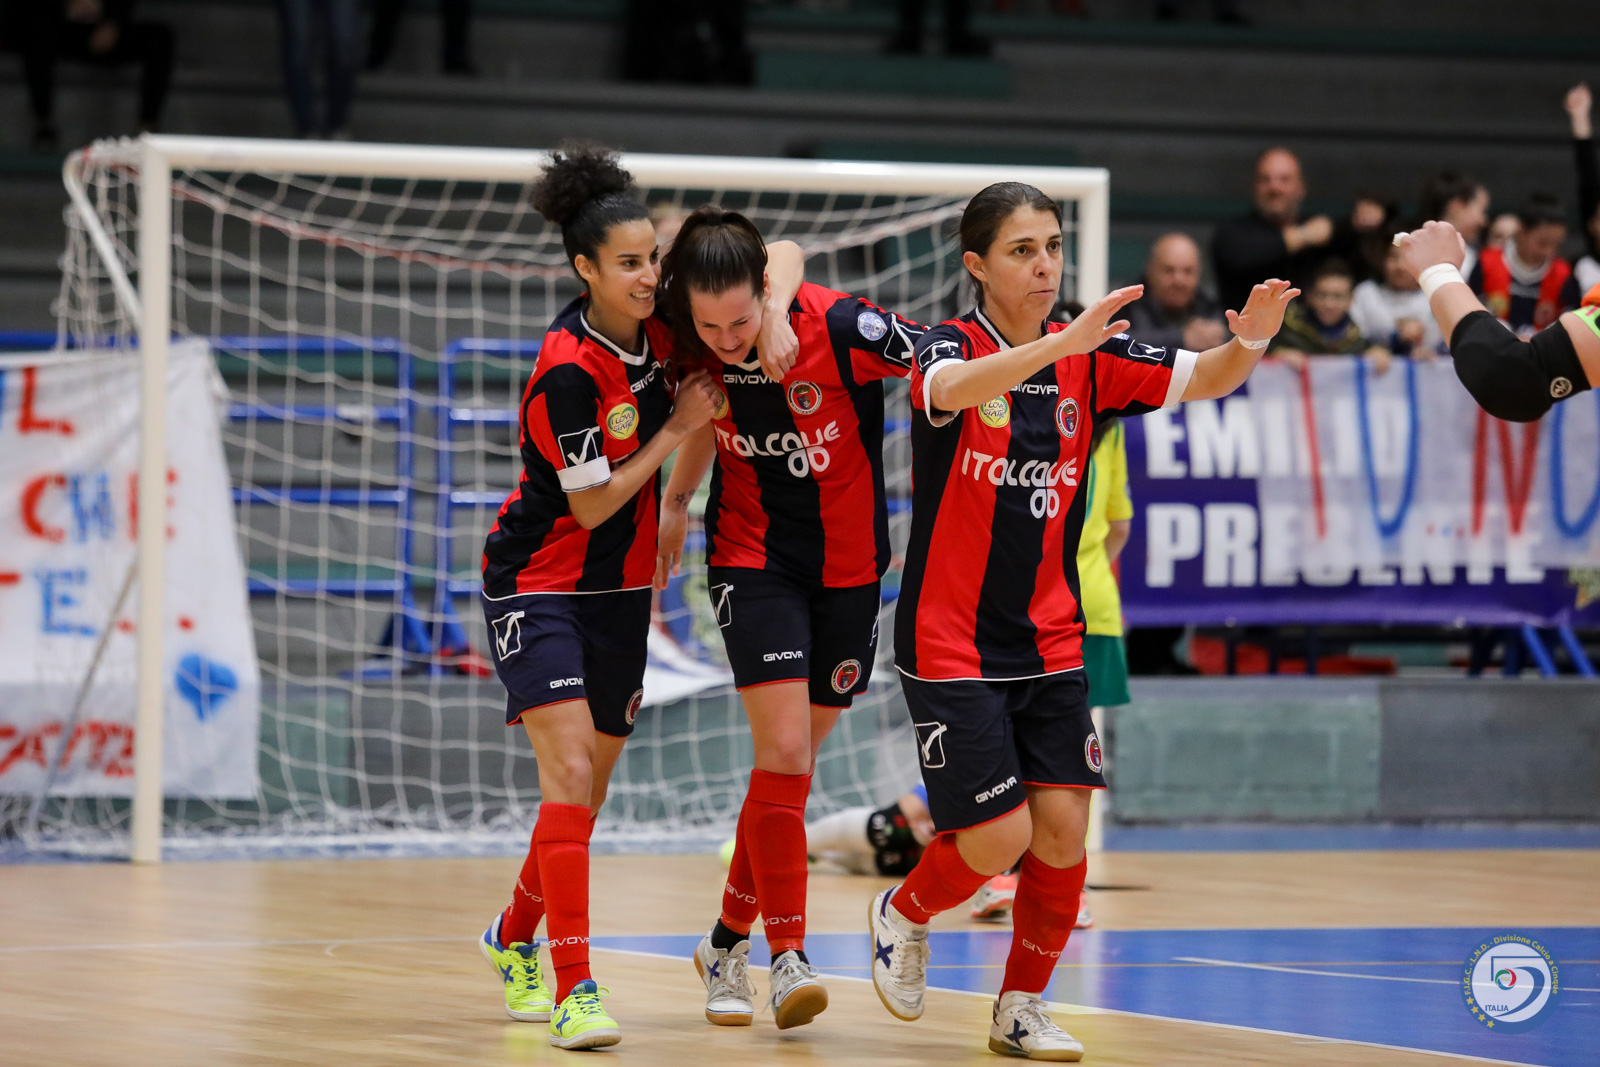 Bisceglie Femminile – Real Statte 2-3 | 1a giornata Serie A femminile 20-21